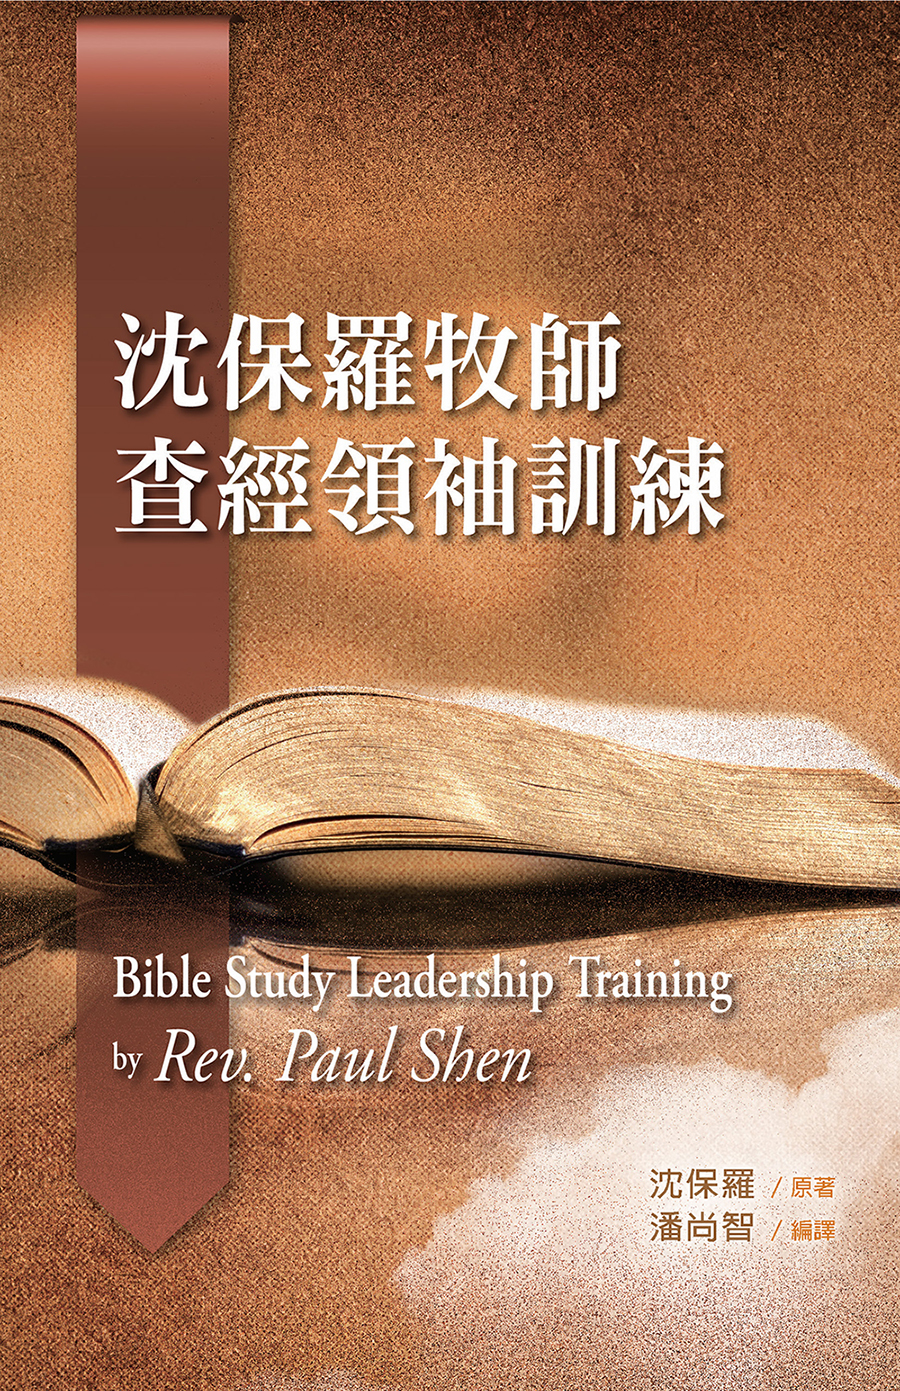 E1-04 沈保羅牧師查經領袖訓練 Bible Study Leadership Training by Rev. Paul Shen 特價 (至四月底截止)